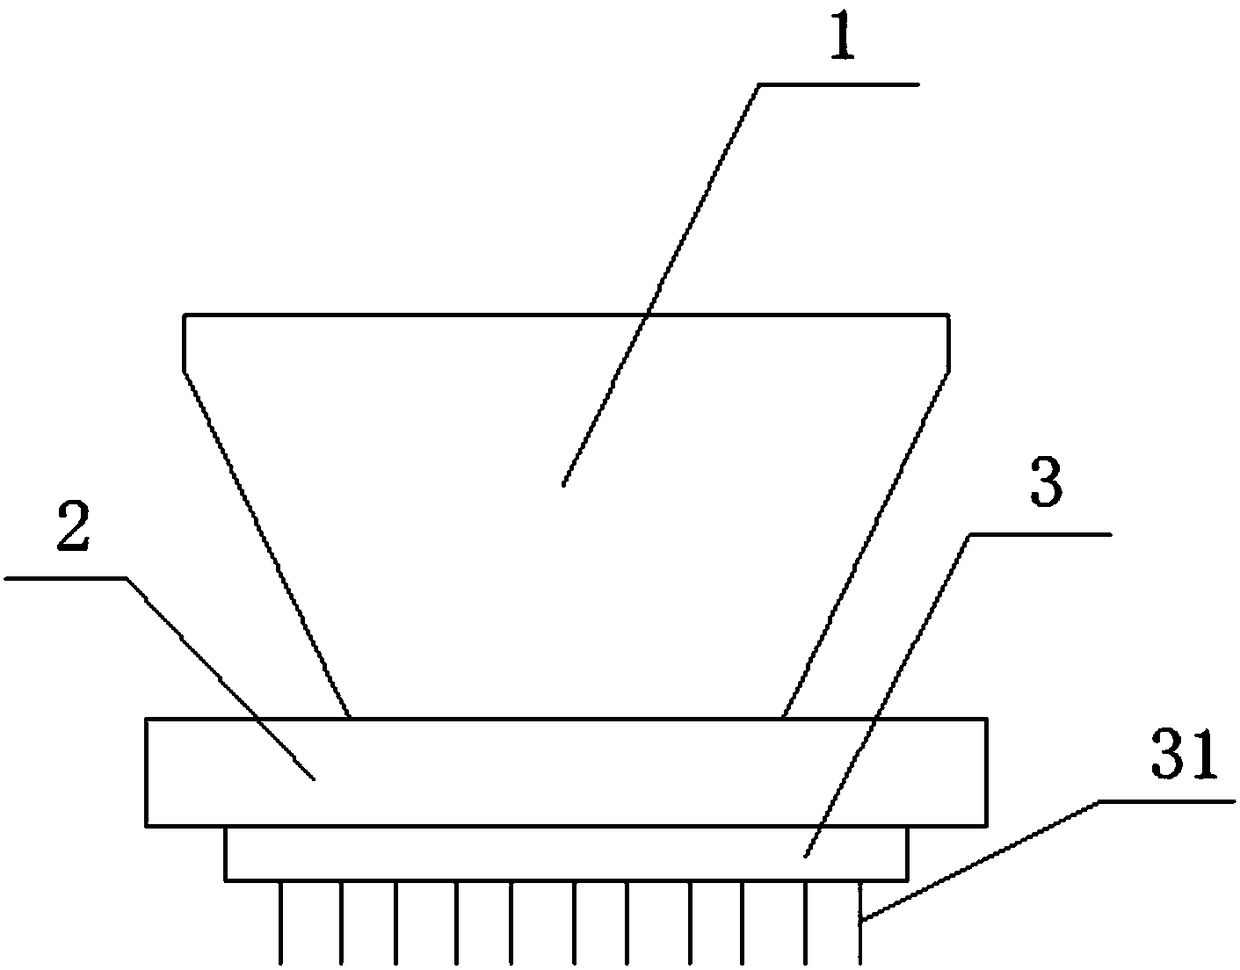 Light cone coupling process